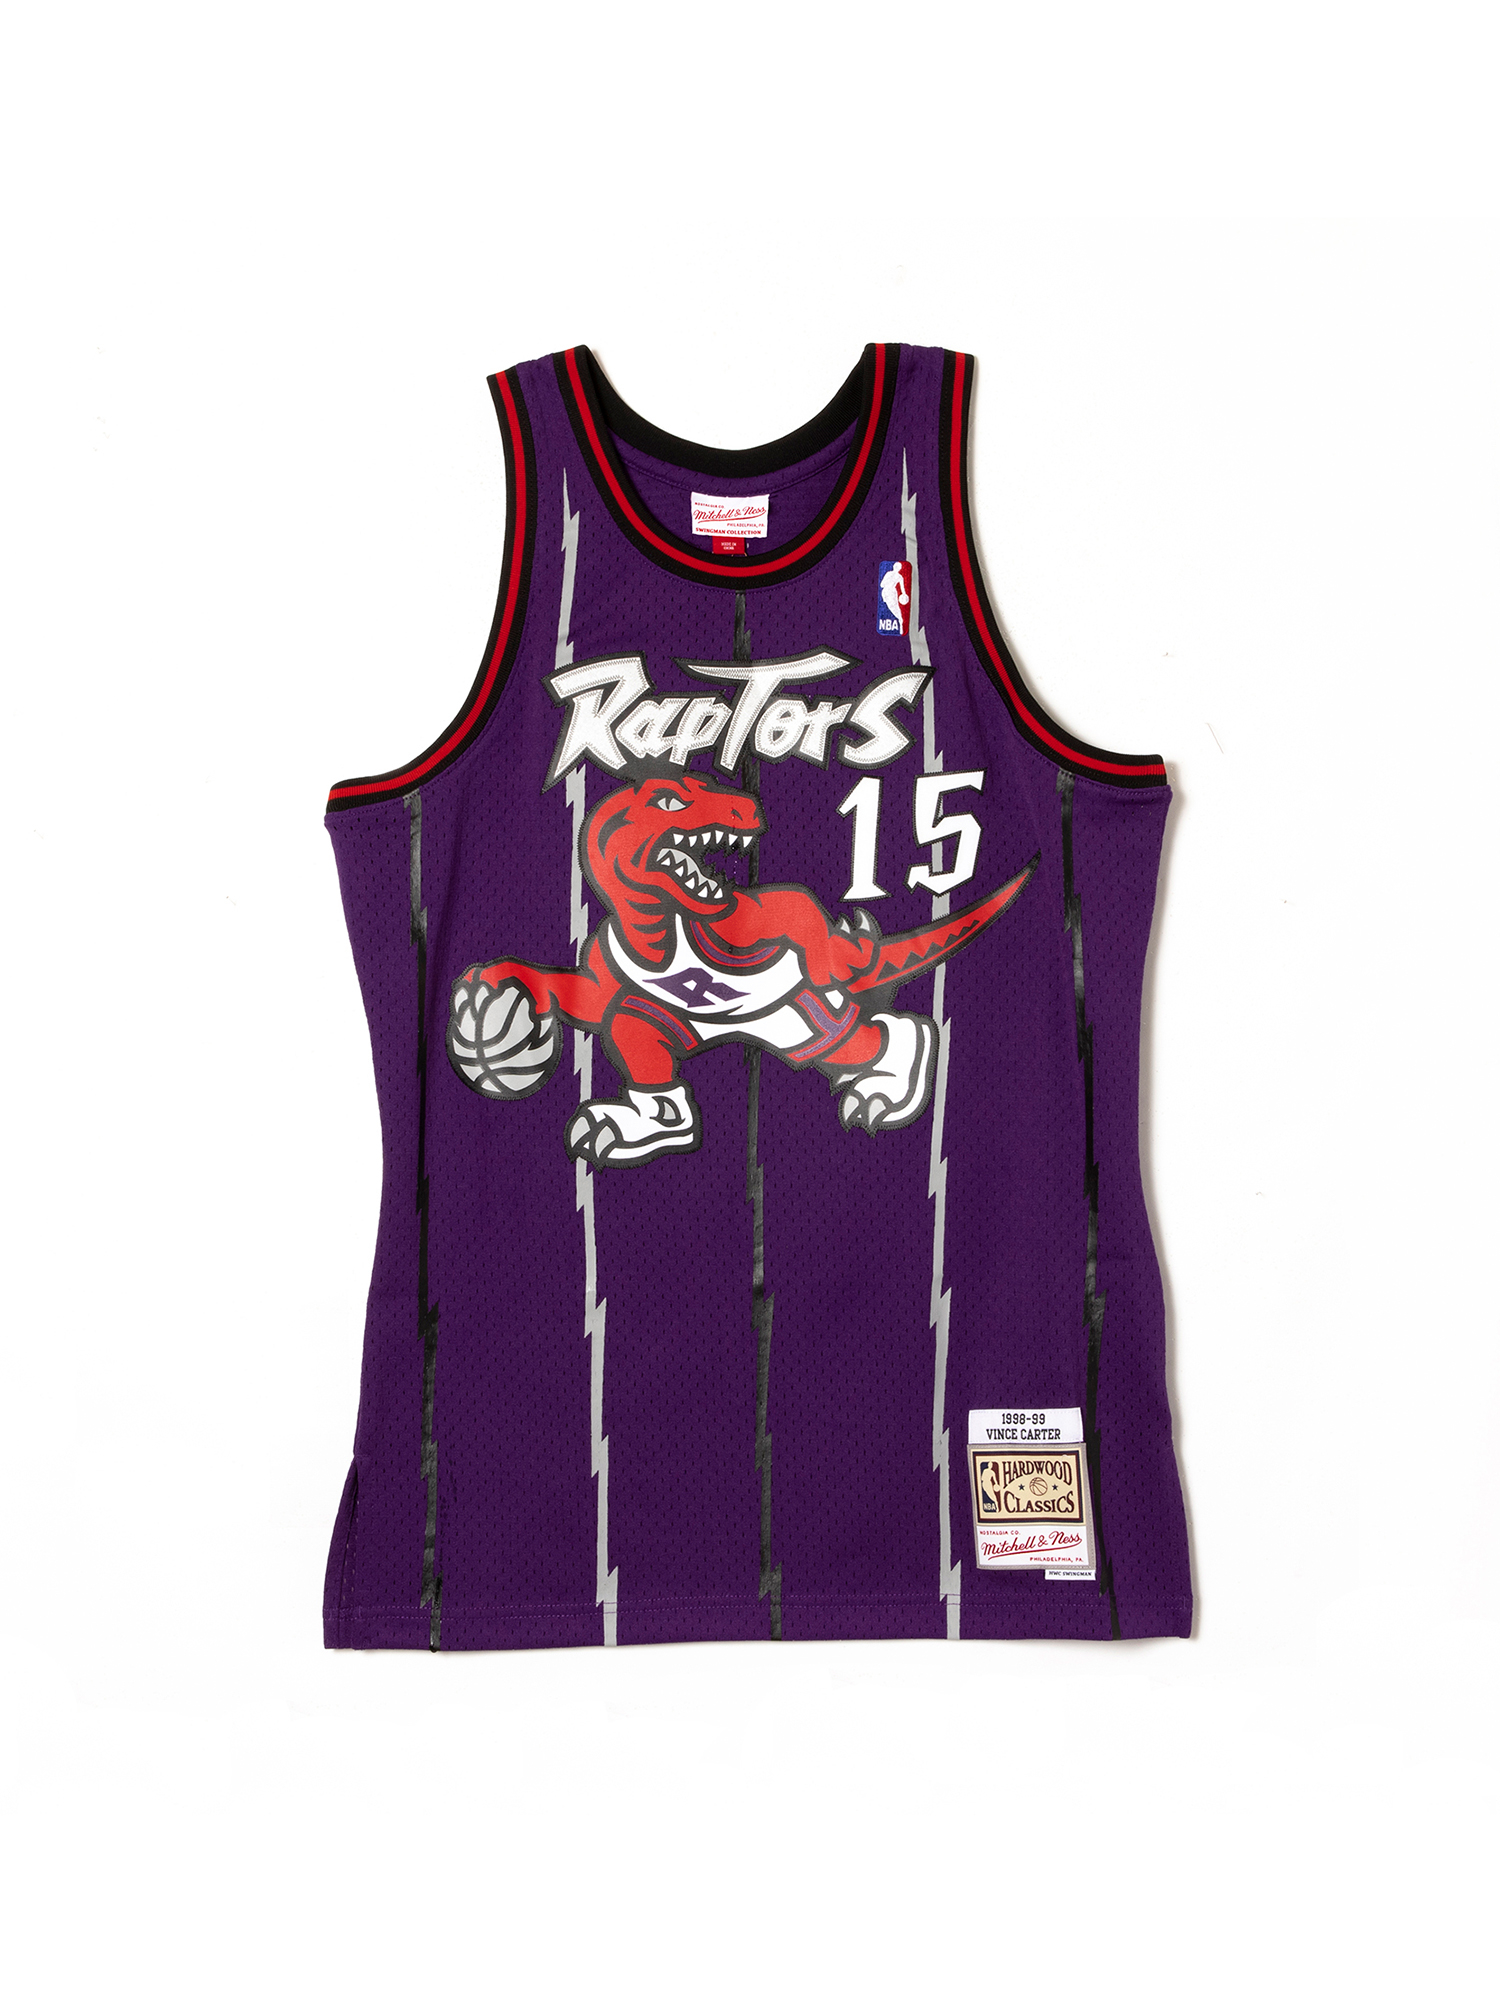 NBA #15 CARTER スウィングマン ミッチェルアンドネス ユニフォーム RAPTORS 刺繍 激レア！ ラプターズ ビンス・カーター